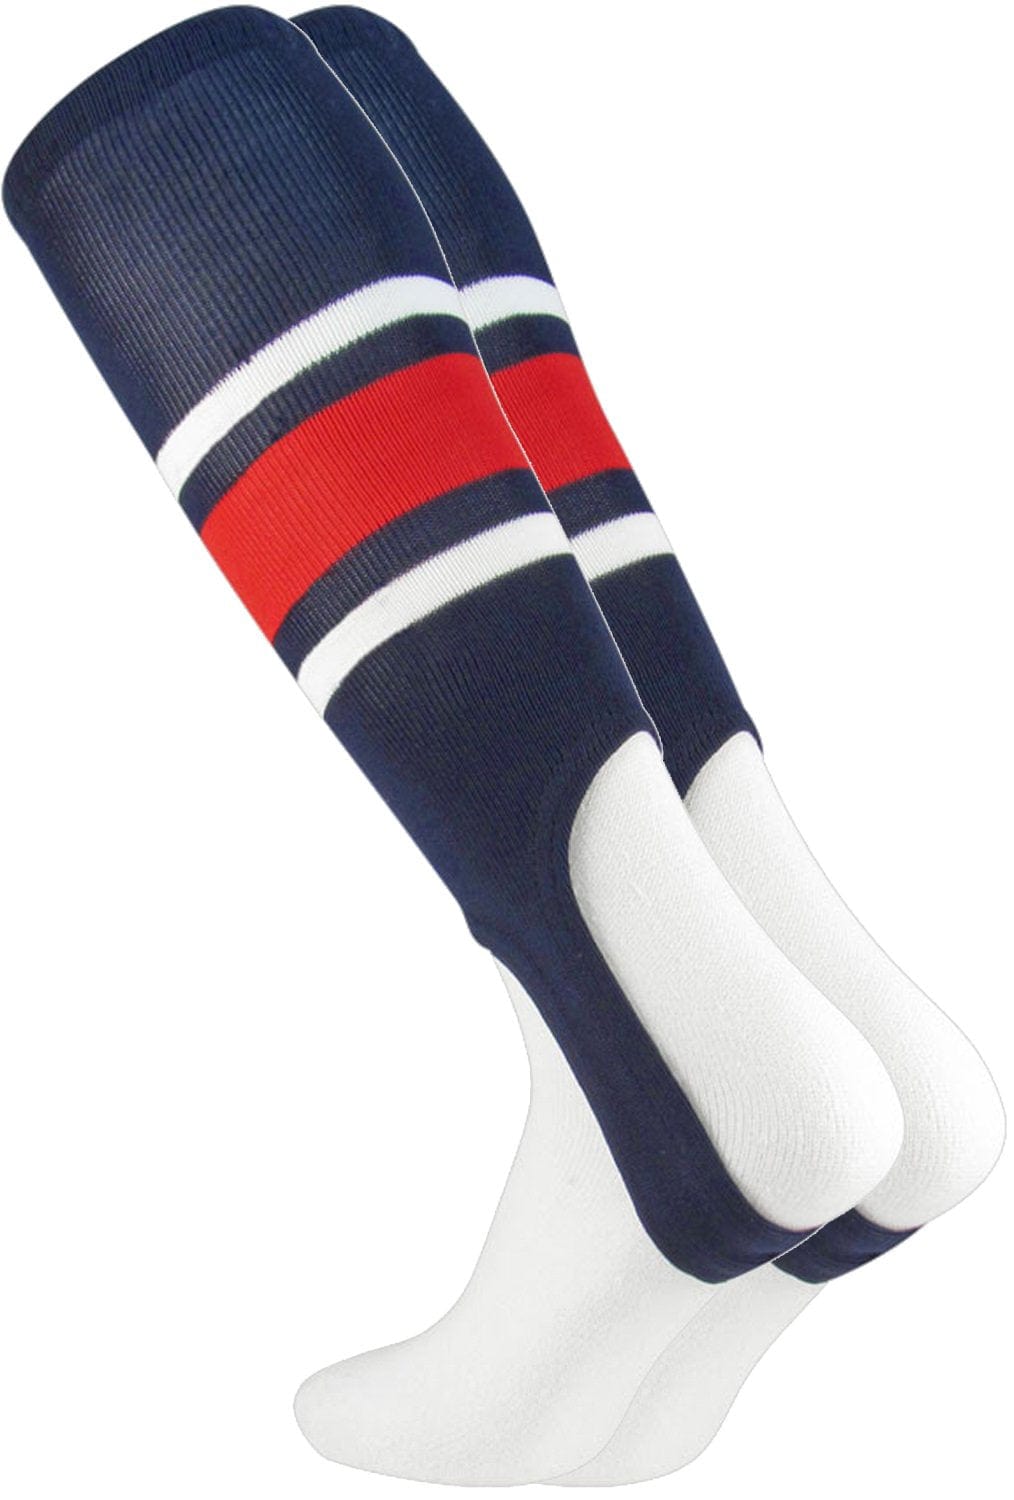 Baseball Stirrups Socks | Youth & Men's | Striped & Solid Colors | TCK